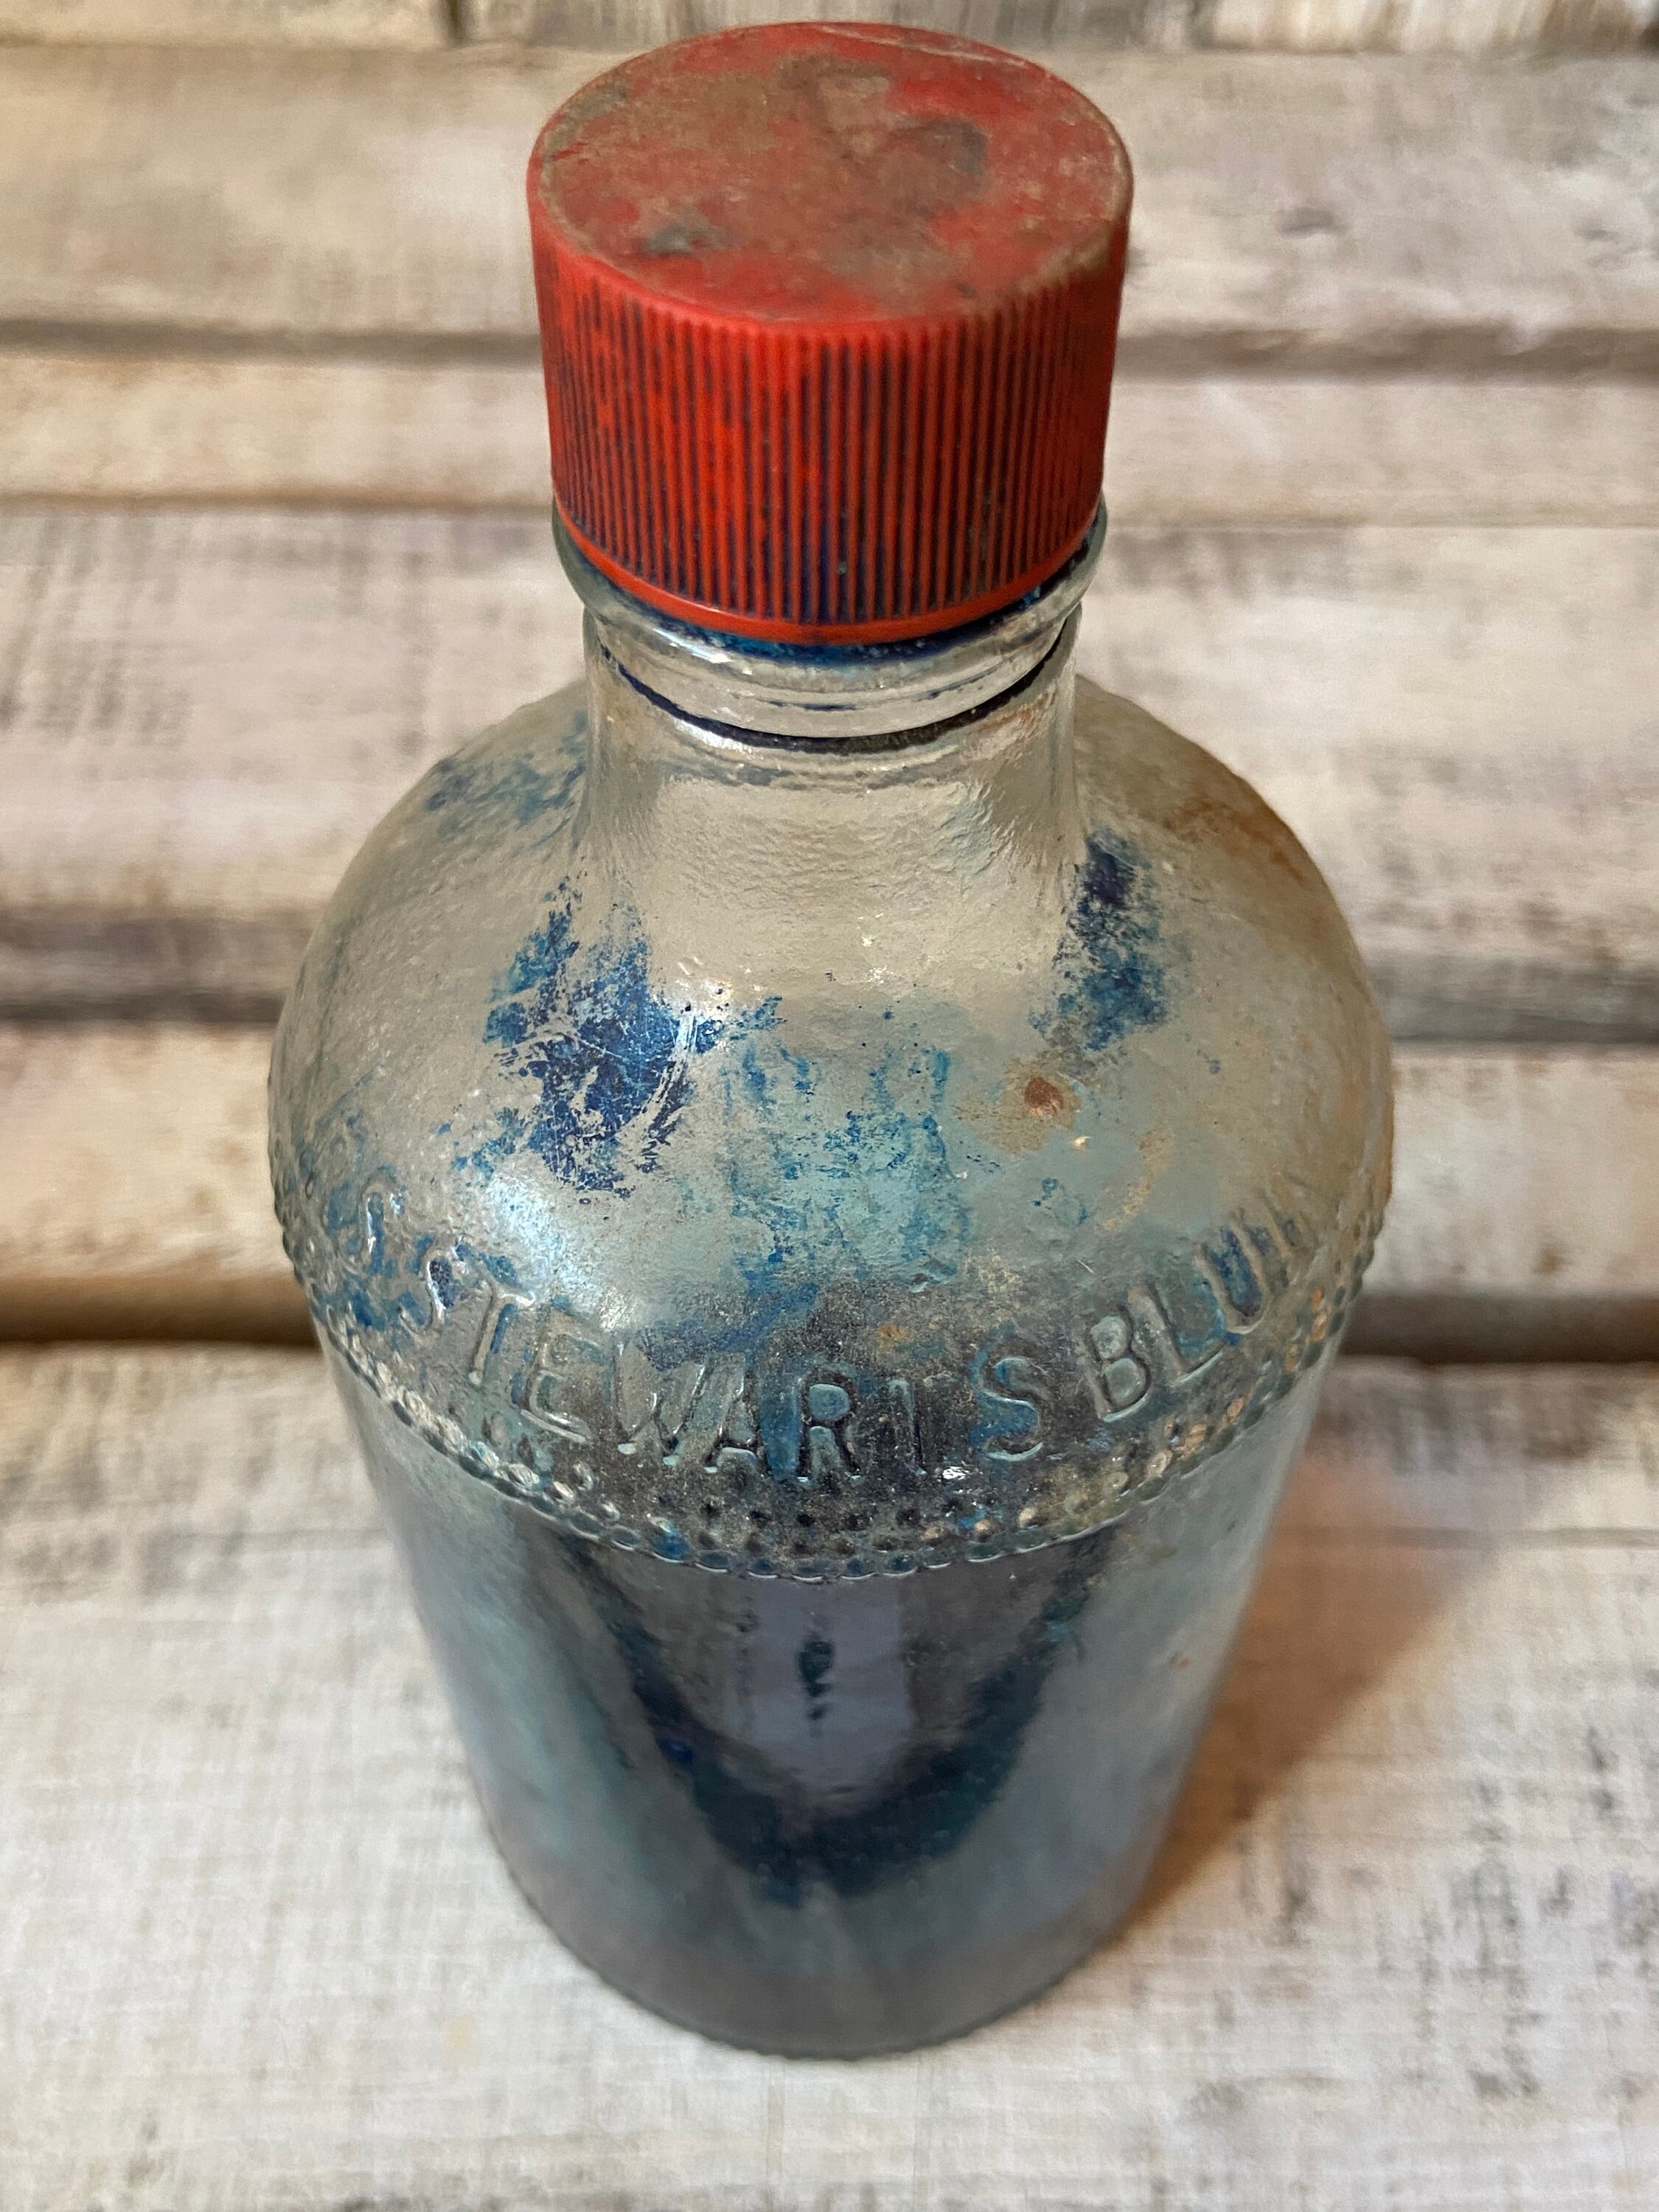 Vintage Mrs Stewarts Liquid Bluing Bottle W Paper Label, Laundry